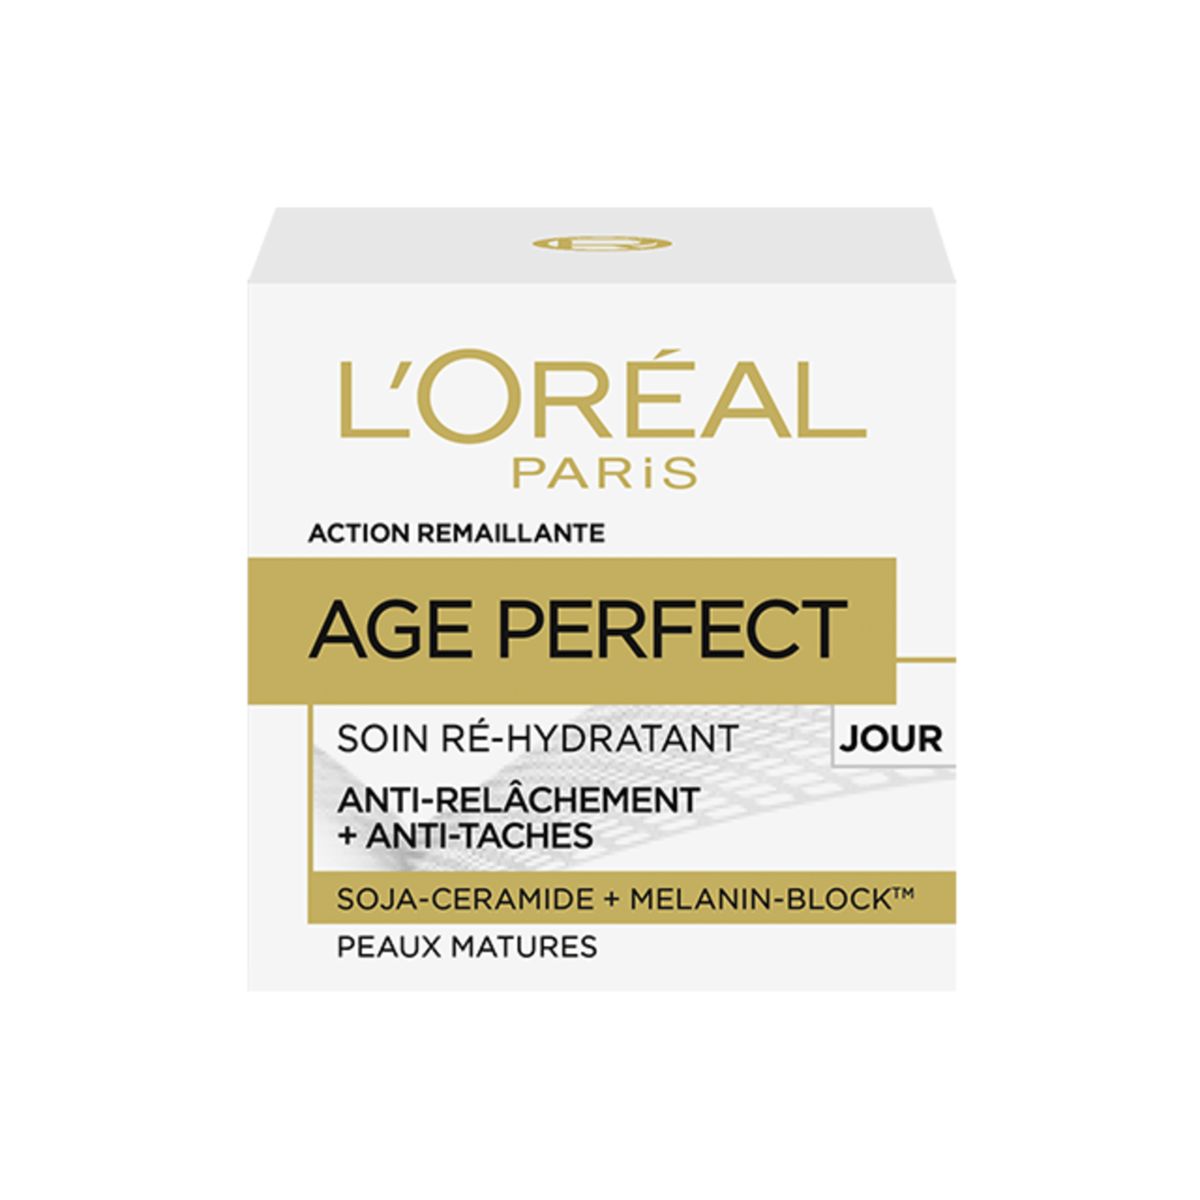 L'Oréal Age Perfect Re-hydraterend verzorging dag rijpe huid 50 ml